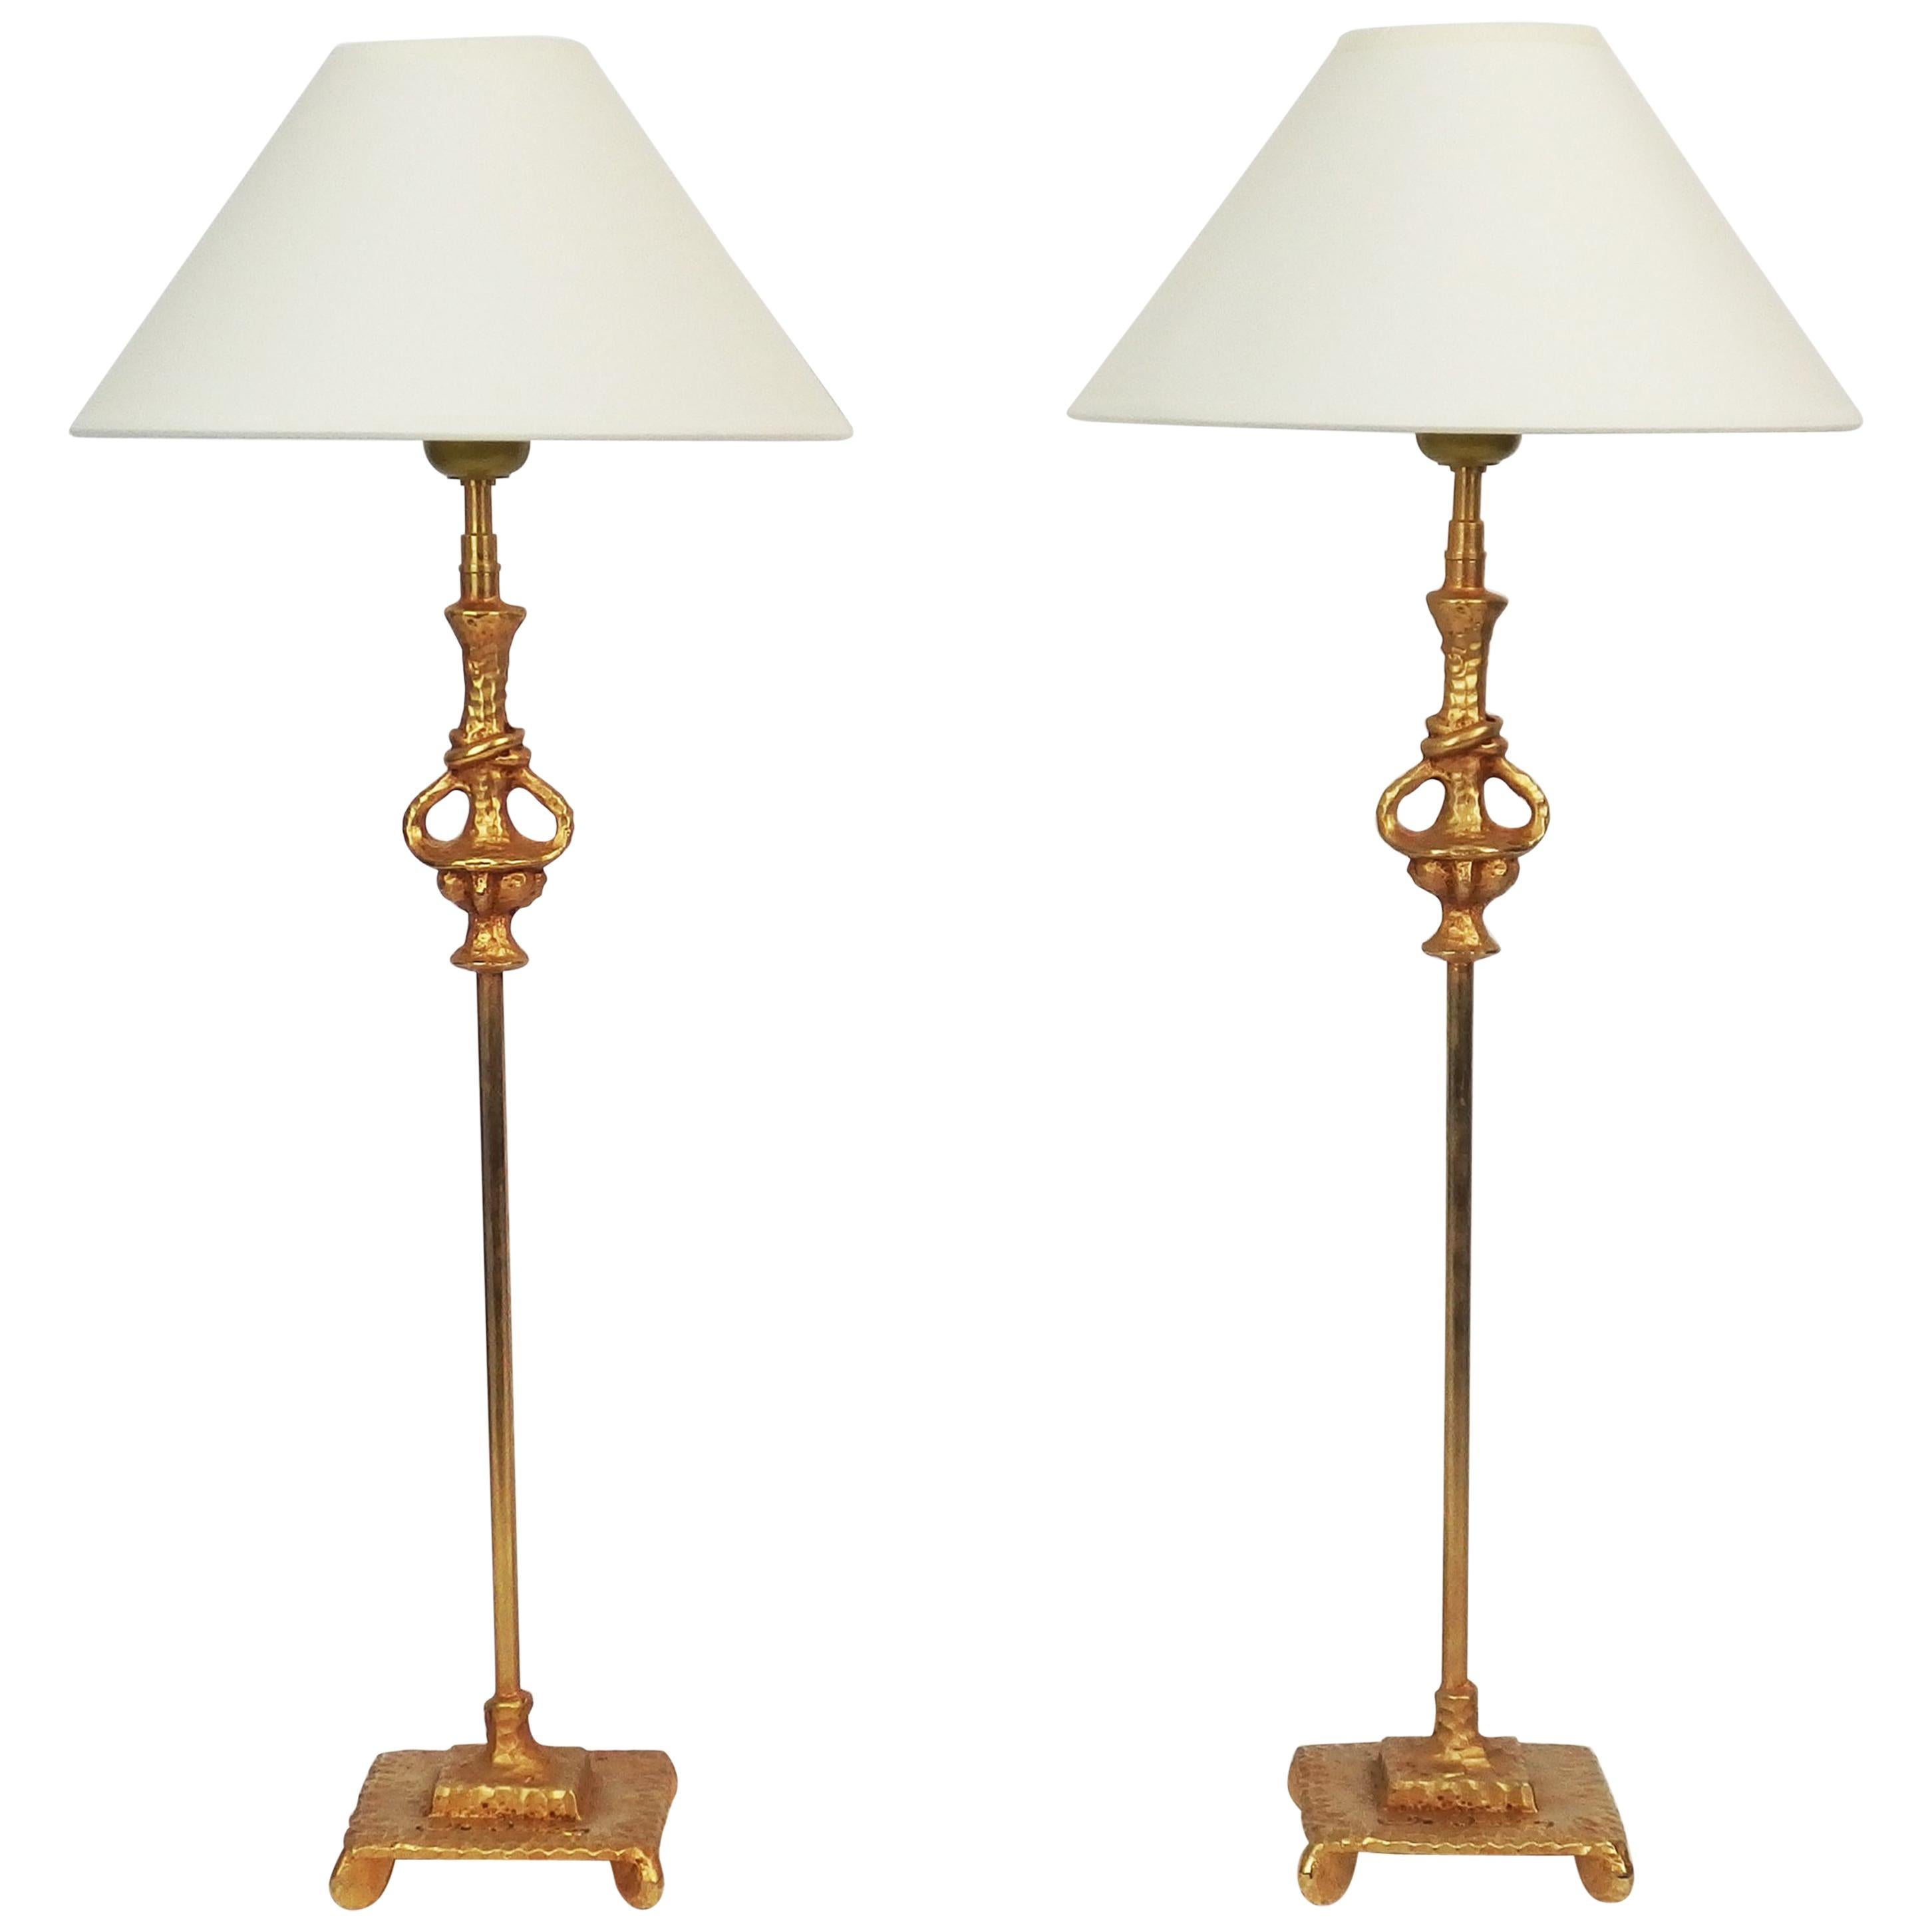 Pair of Gilt Metal Table Lamps by Nicolas De Wael for Fondica For Sale